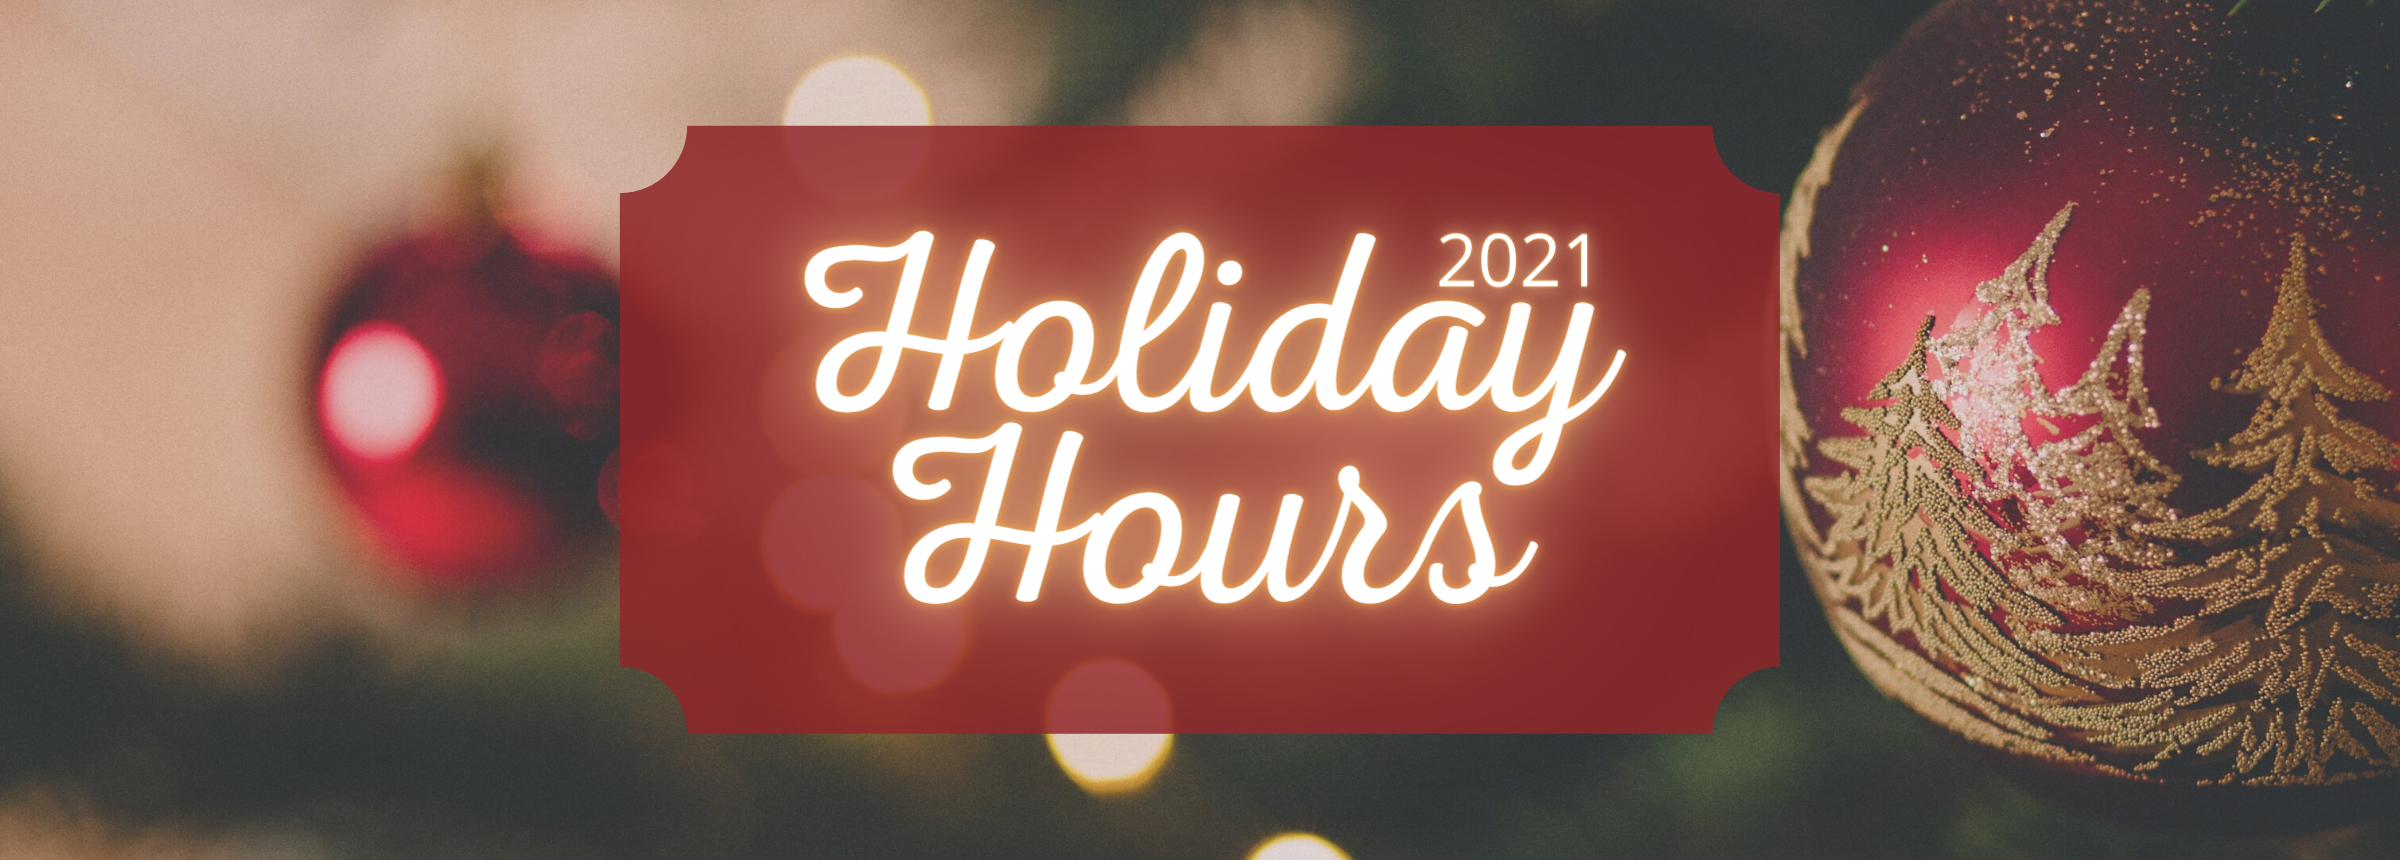 Holiday Hours Blog Header